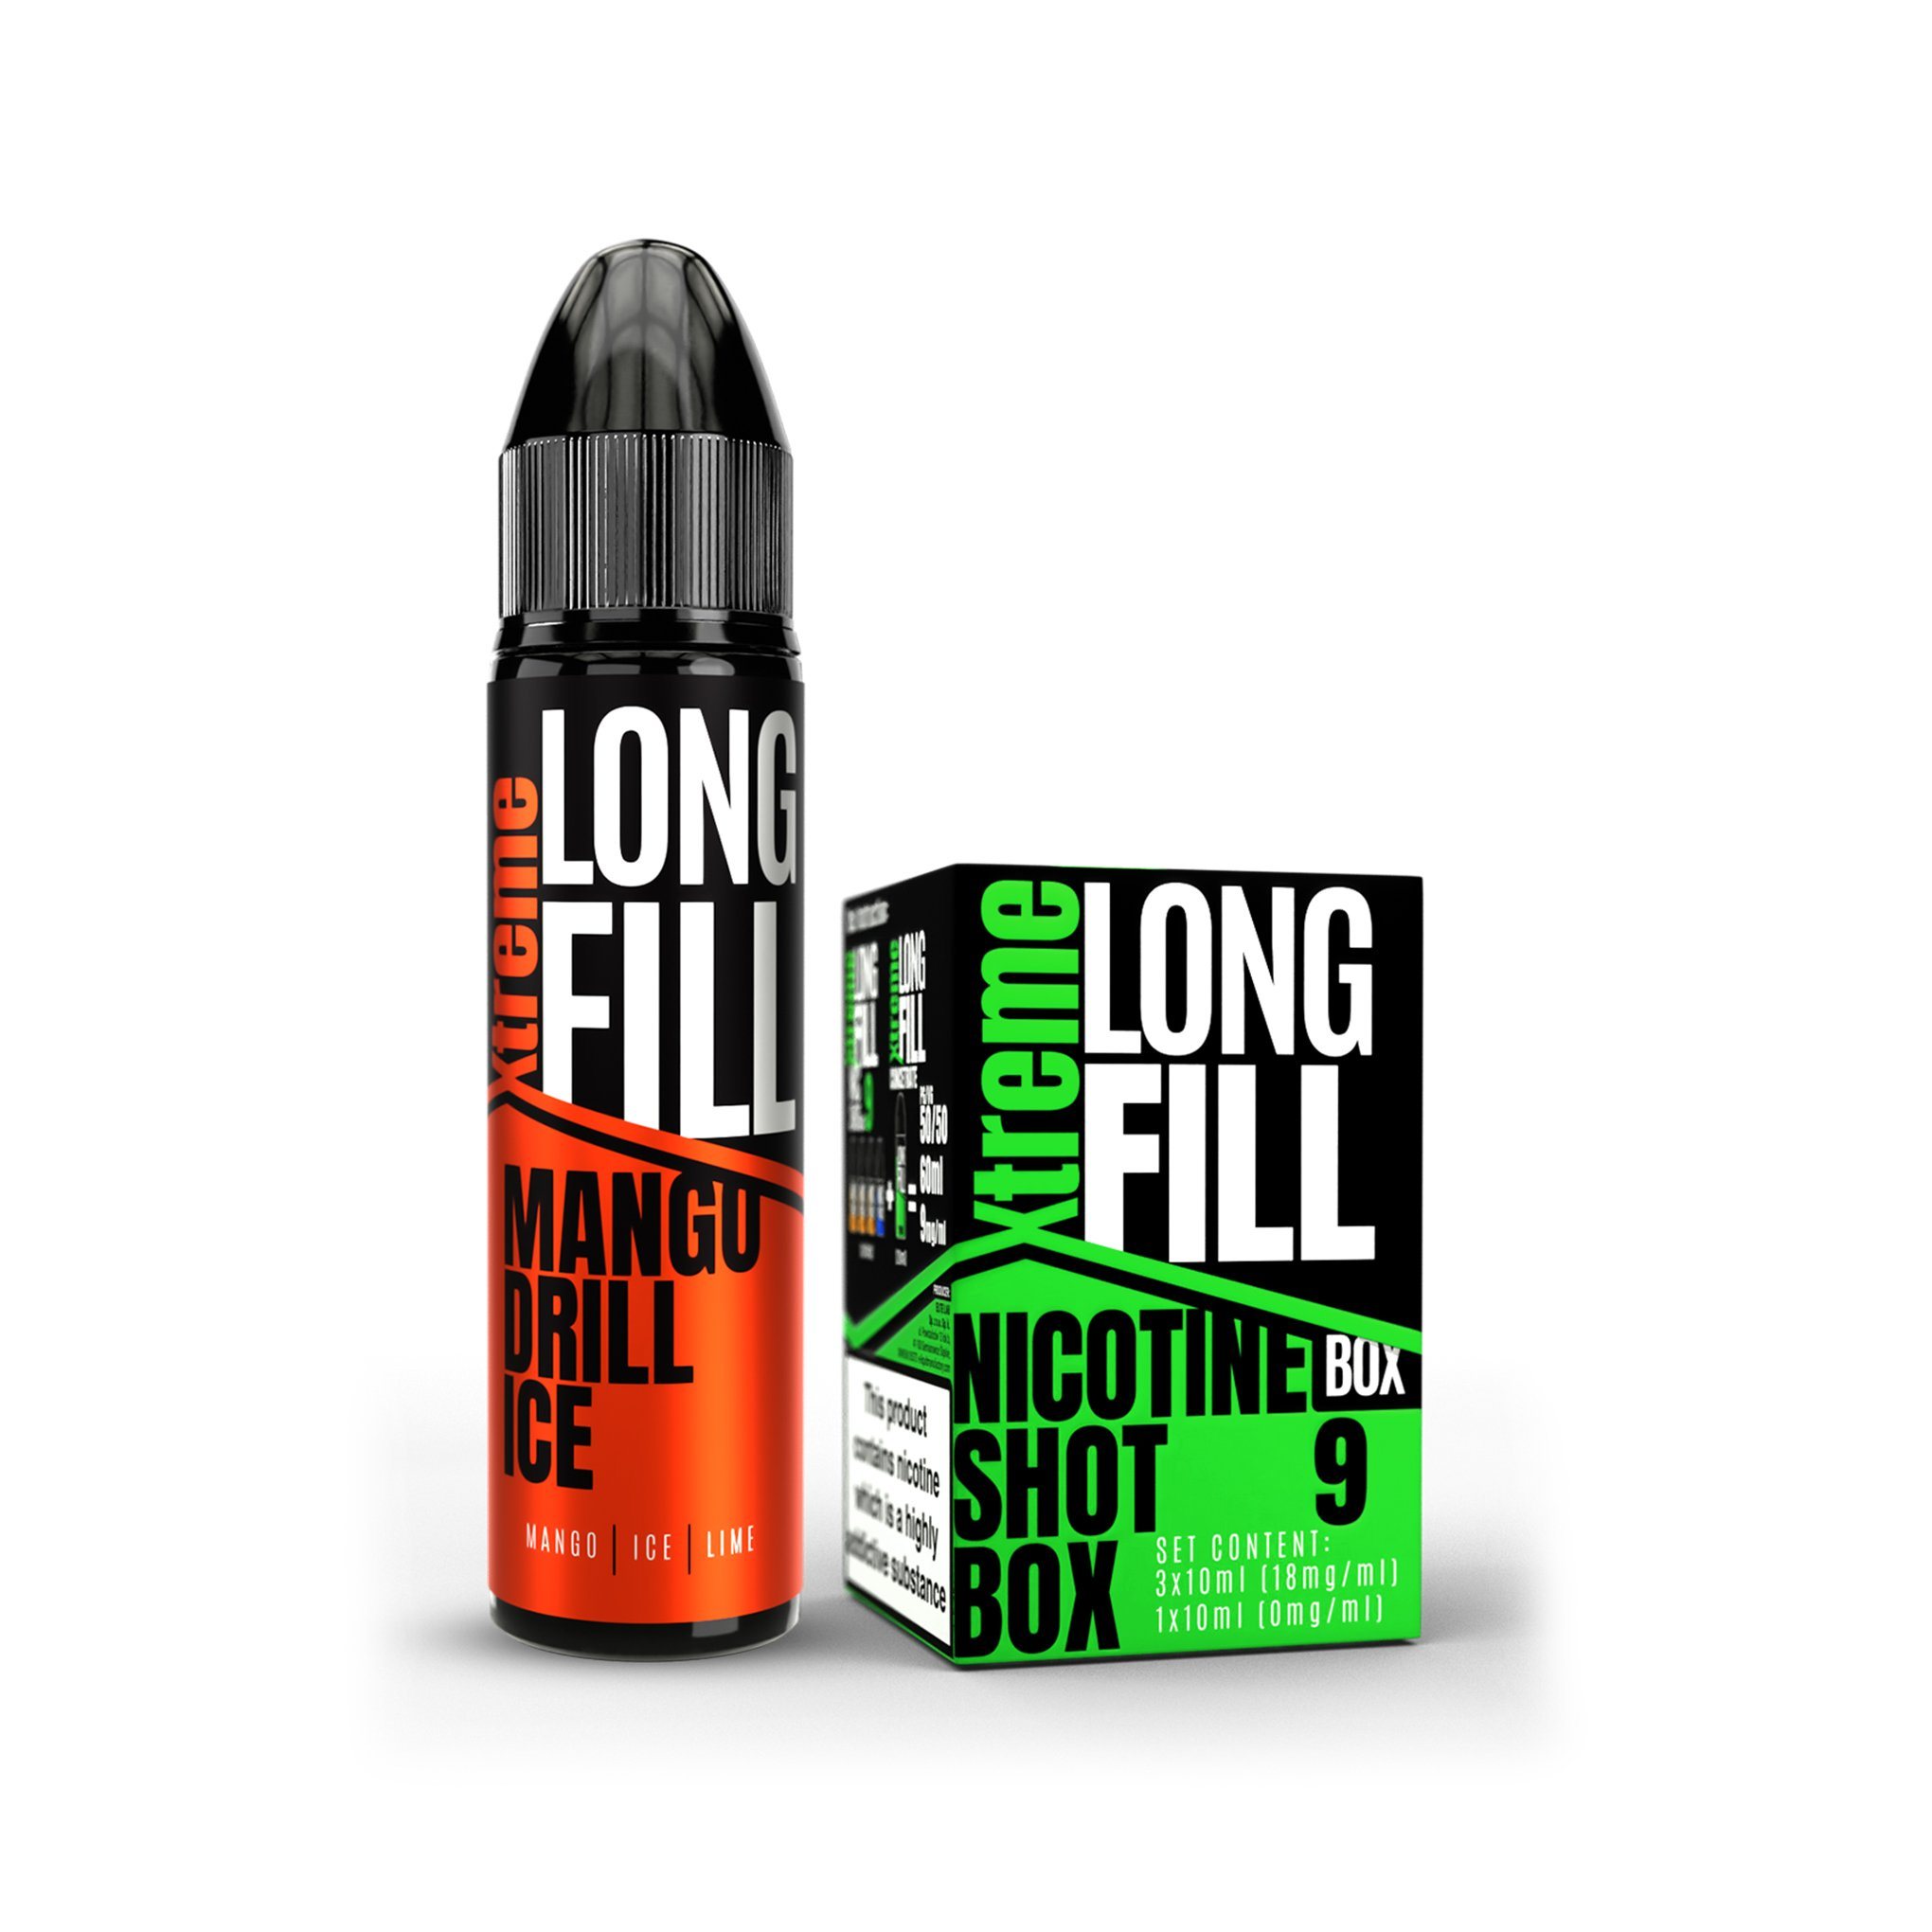 Xtreme Long Fill E-Liquid Mango Drill Ice 9MG - Medium Nicotine